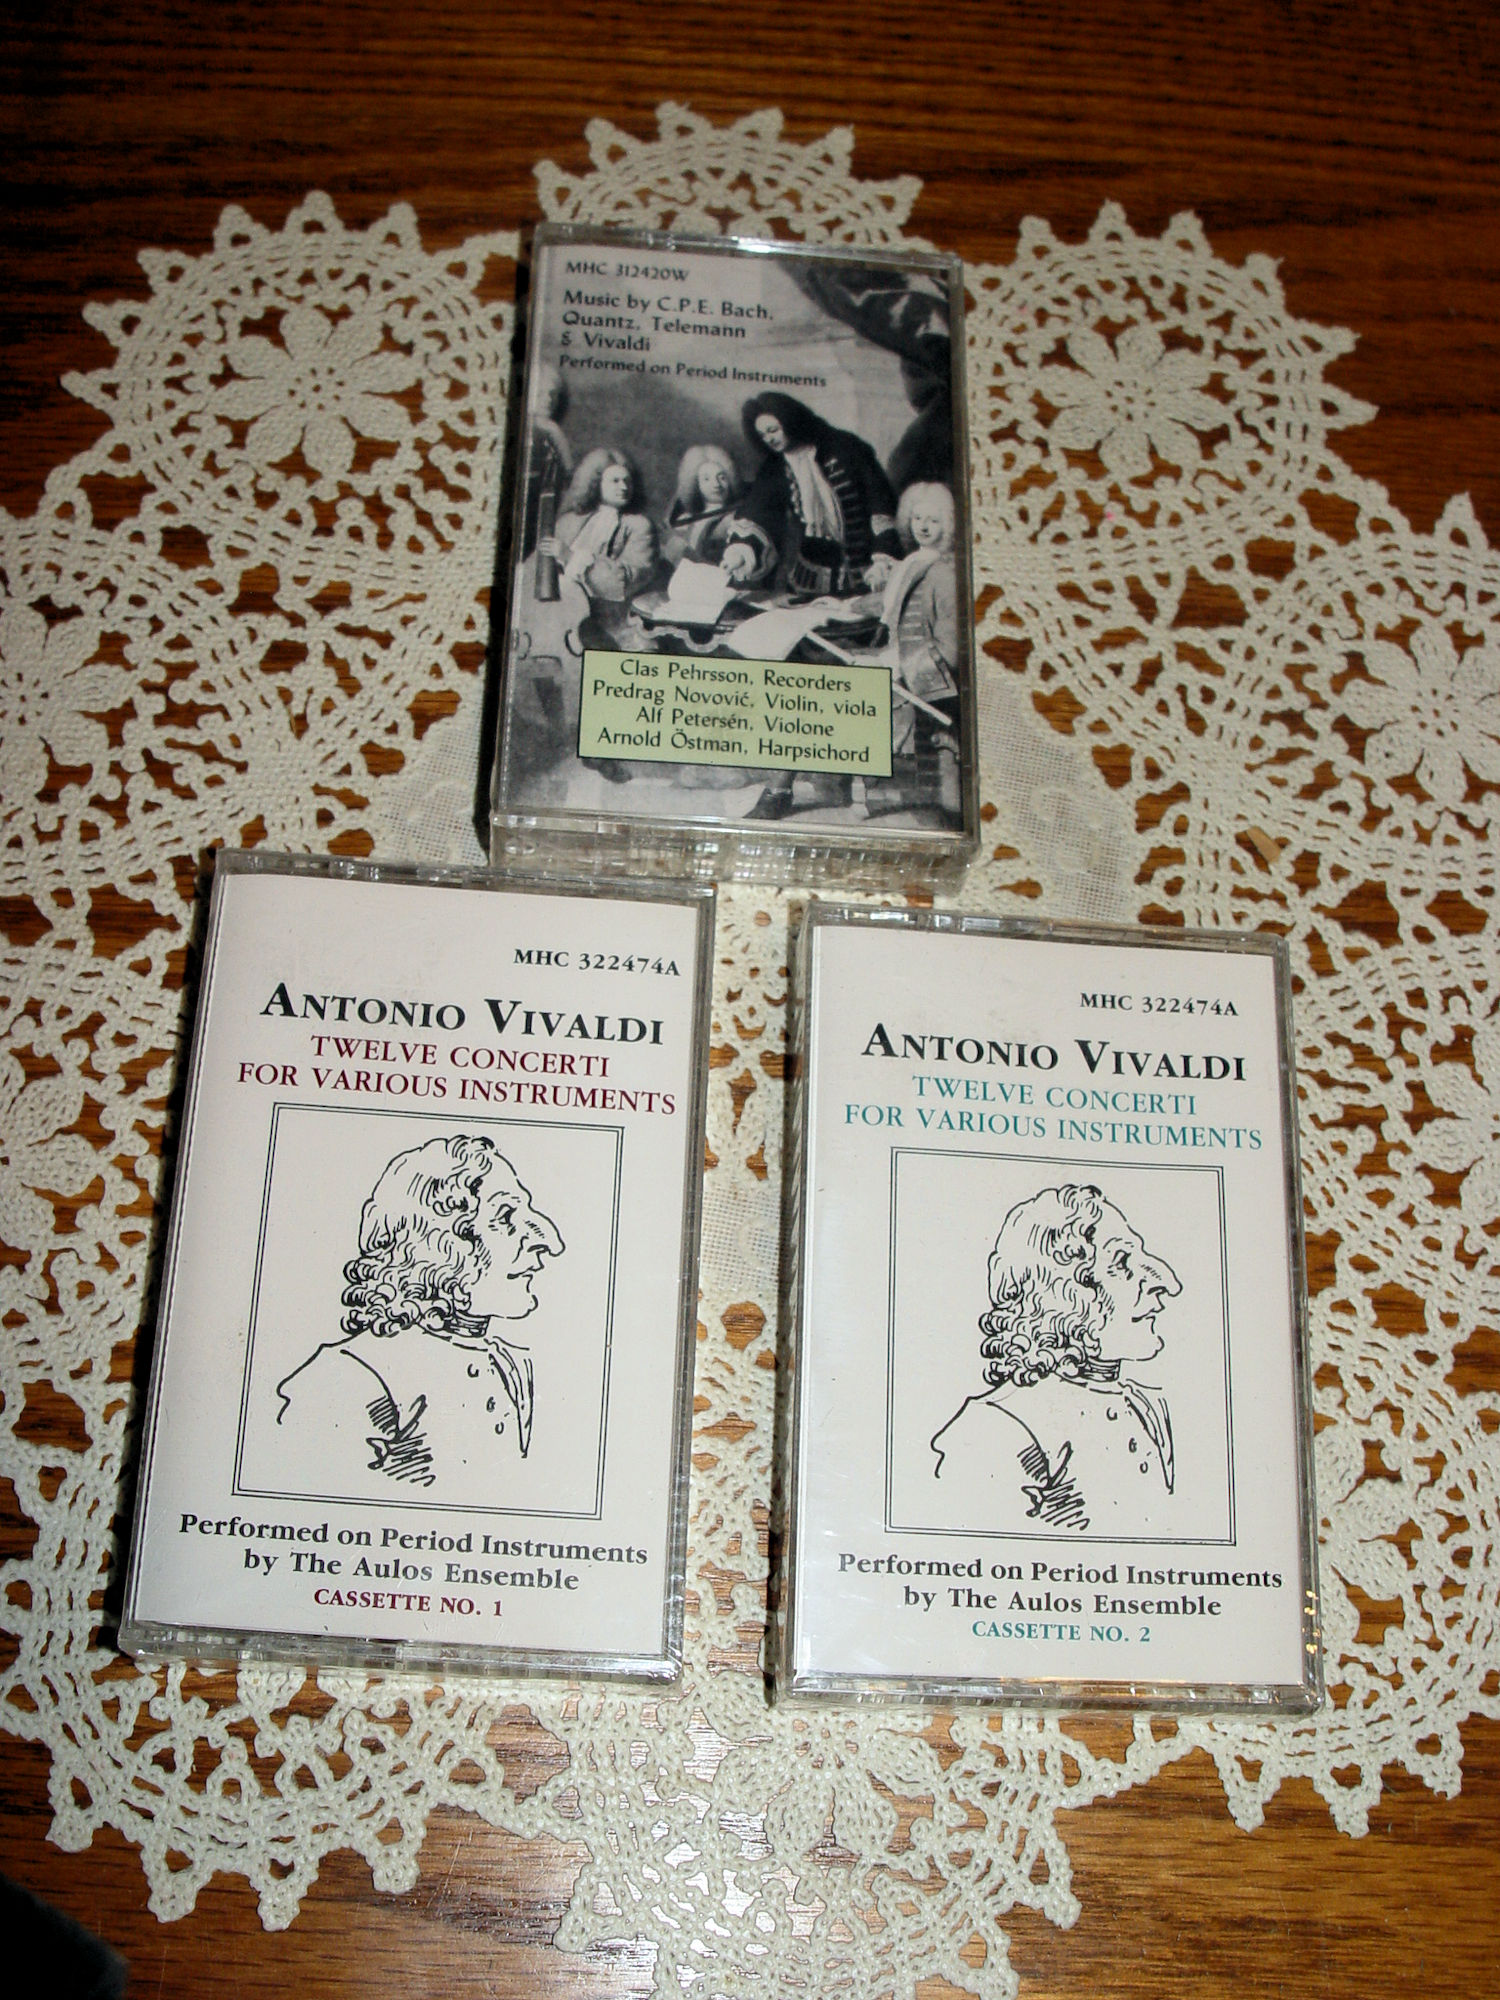 Antonio Vivaldi: Concerti
                                        12 NOS Cassettes No. 1 & 2
                                        Performed On Period Instruments